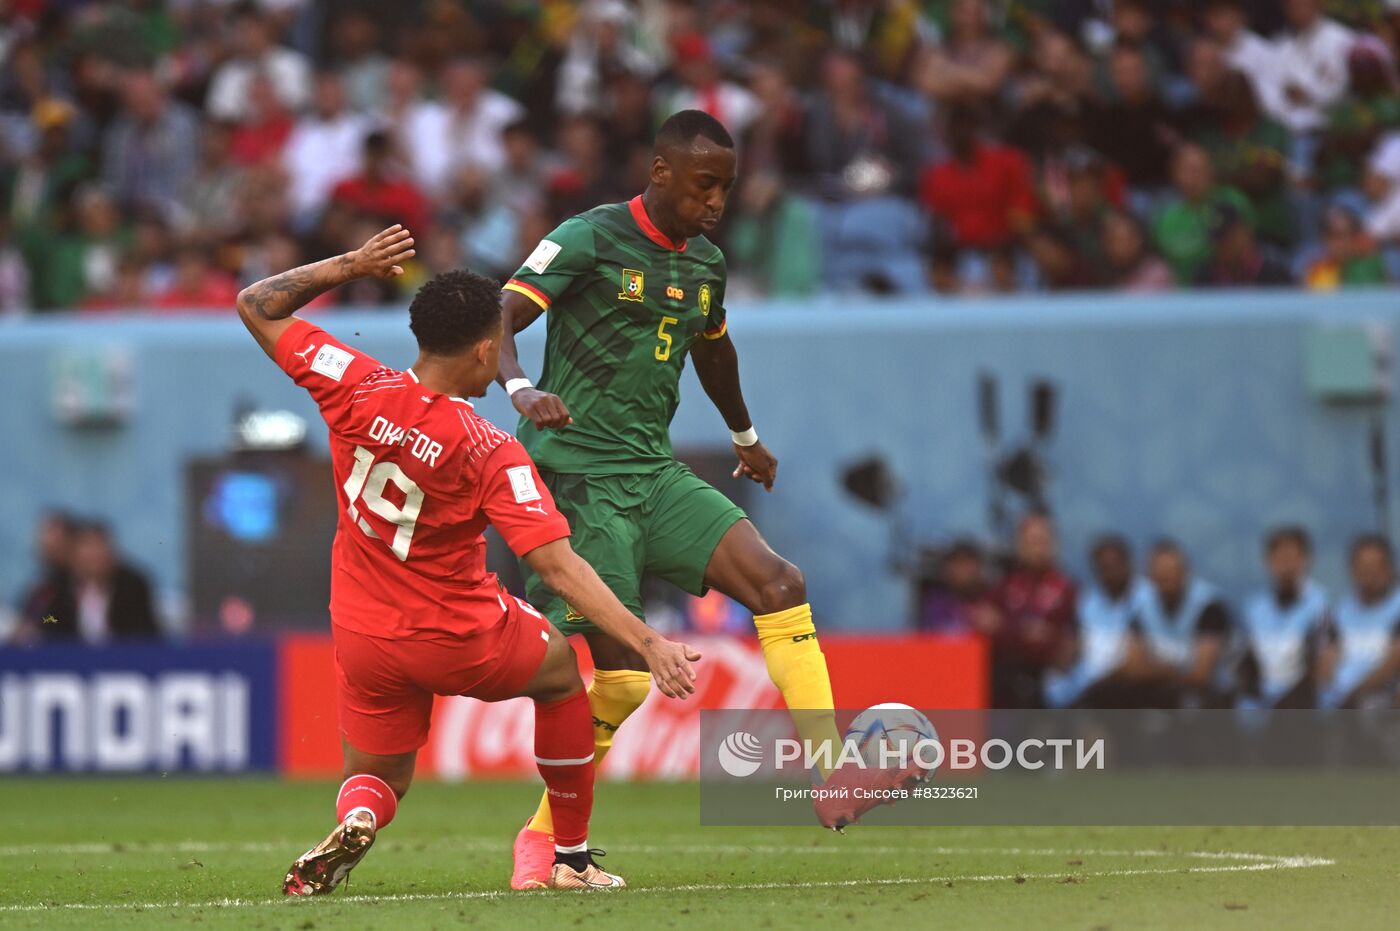 Футбол. Чемпионат мира. Матч Швейцария - Камерун